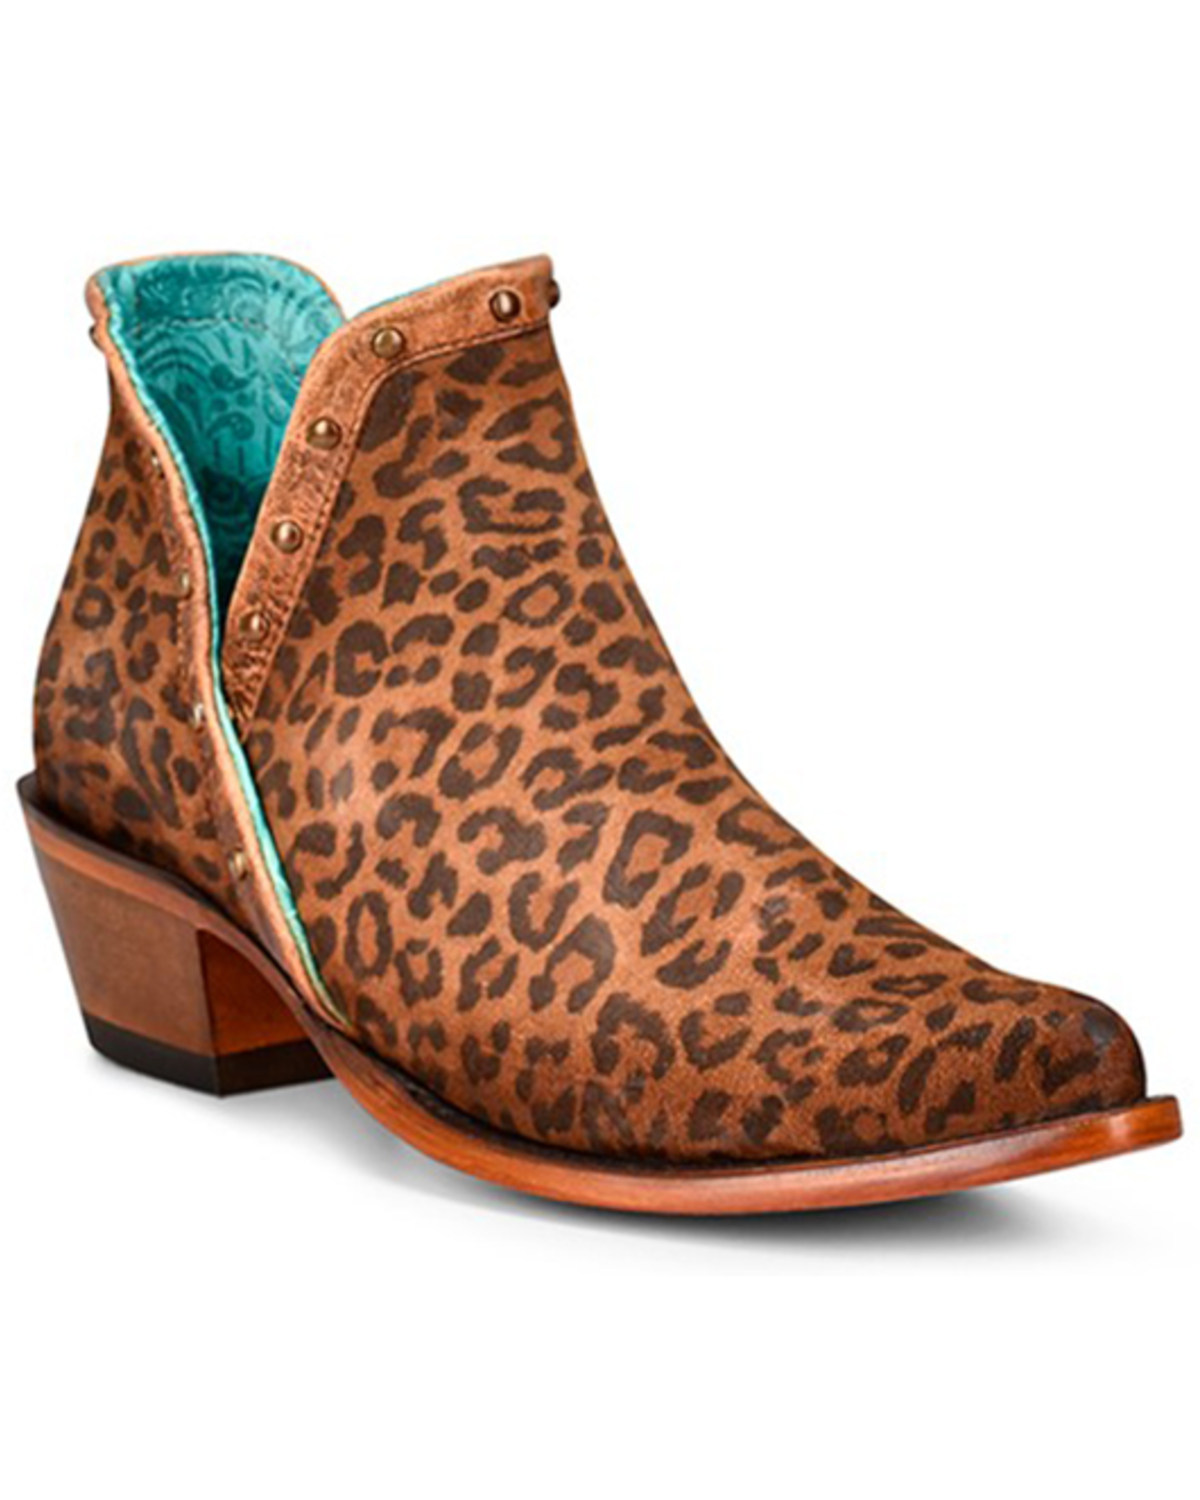 Corral Women's Leopard Print Fashion Booties - Snip Toe